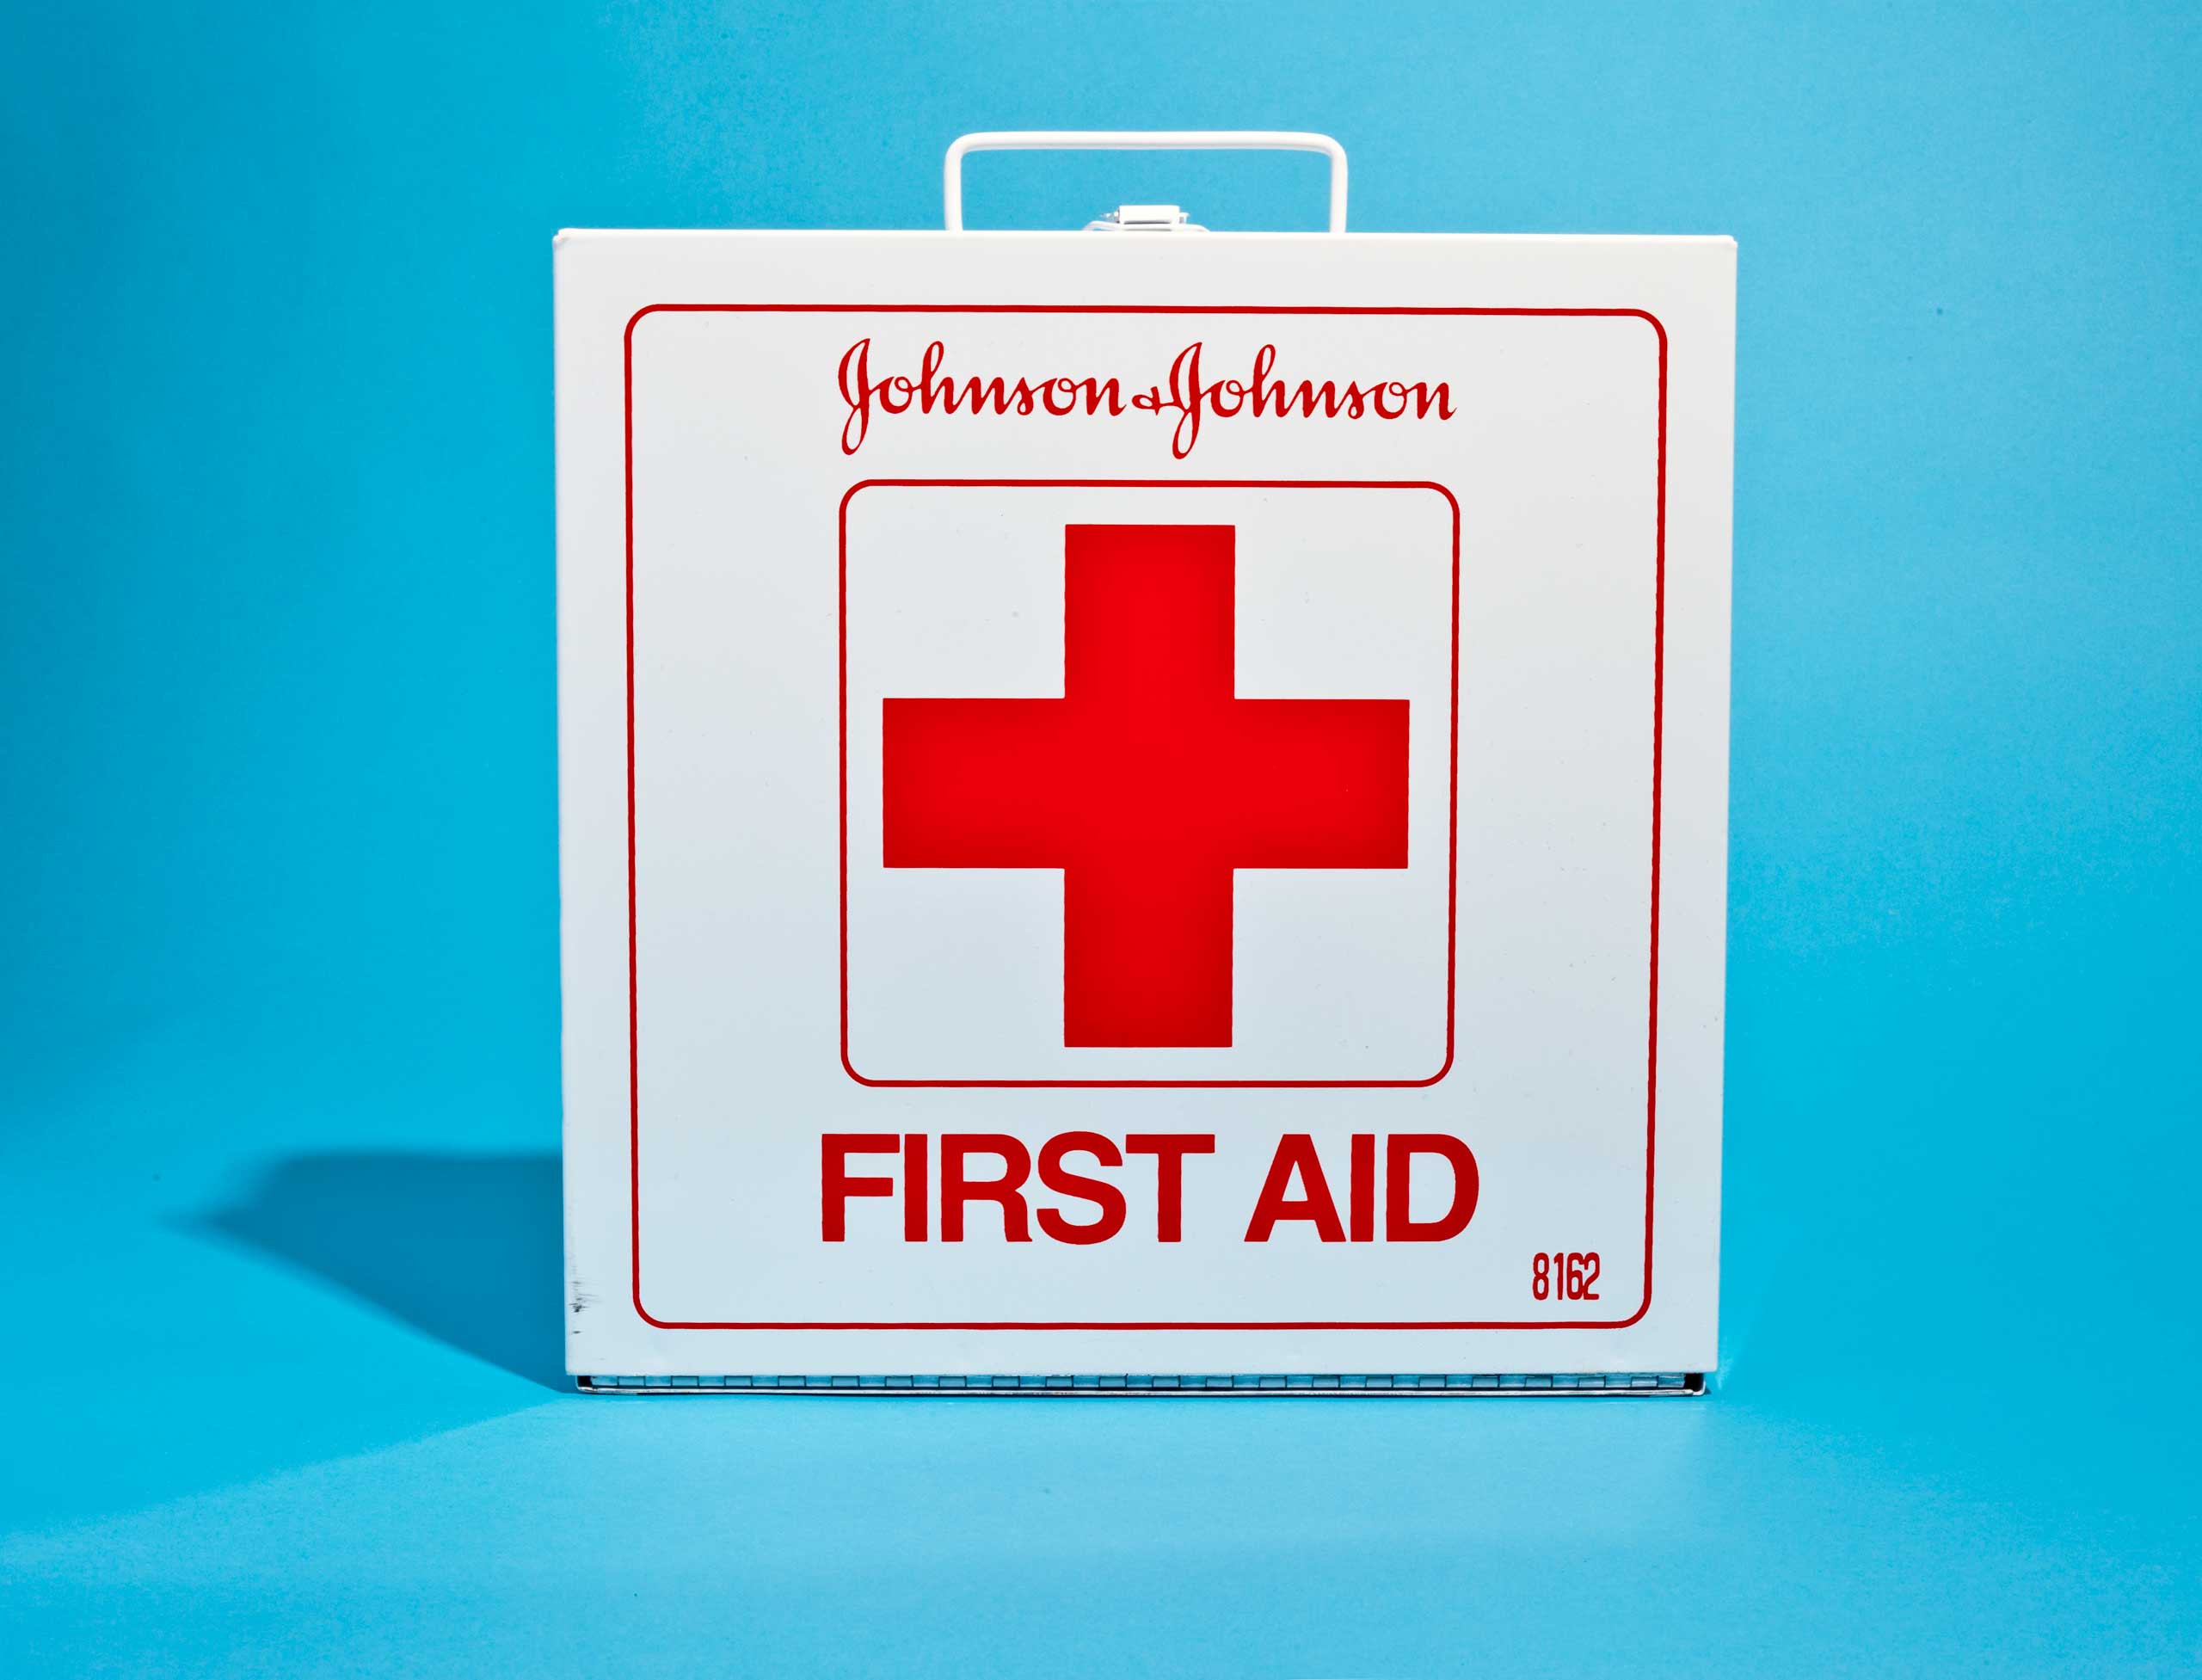 TIME.com stock photos Health First Aid Kit